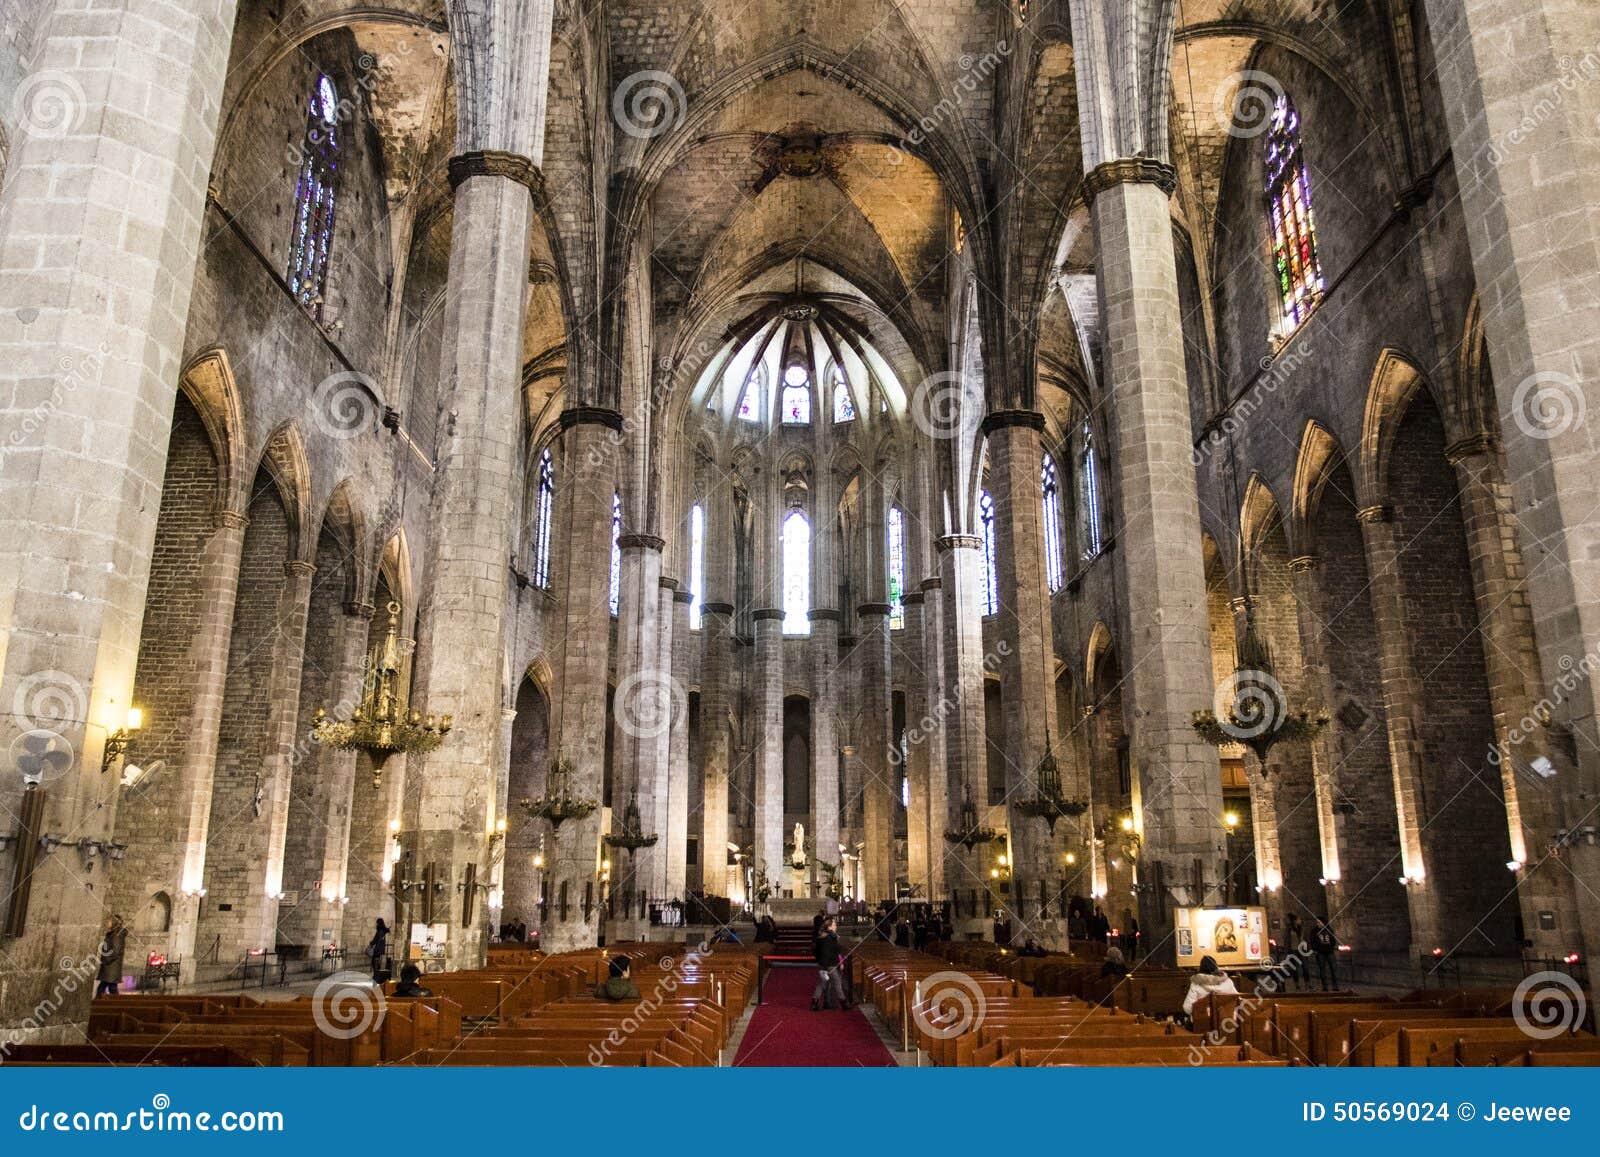 Interior of the Santa Maria Del Mar Church in Barcelona, Catalonia, Spain  Editorial Stock Image - Image of catalonia, religion: 50569024